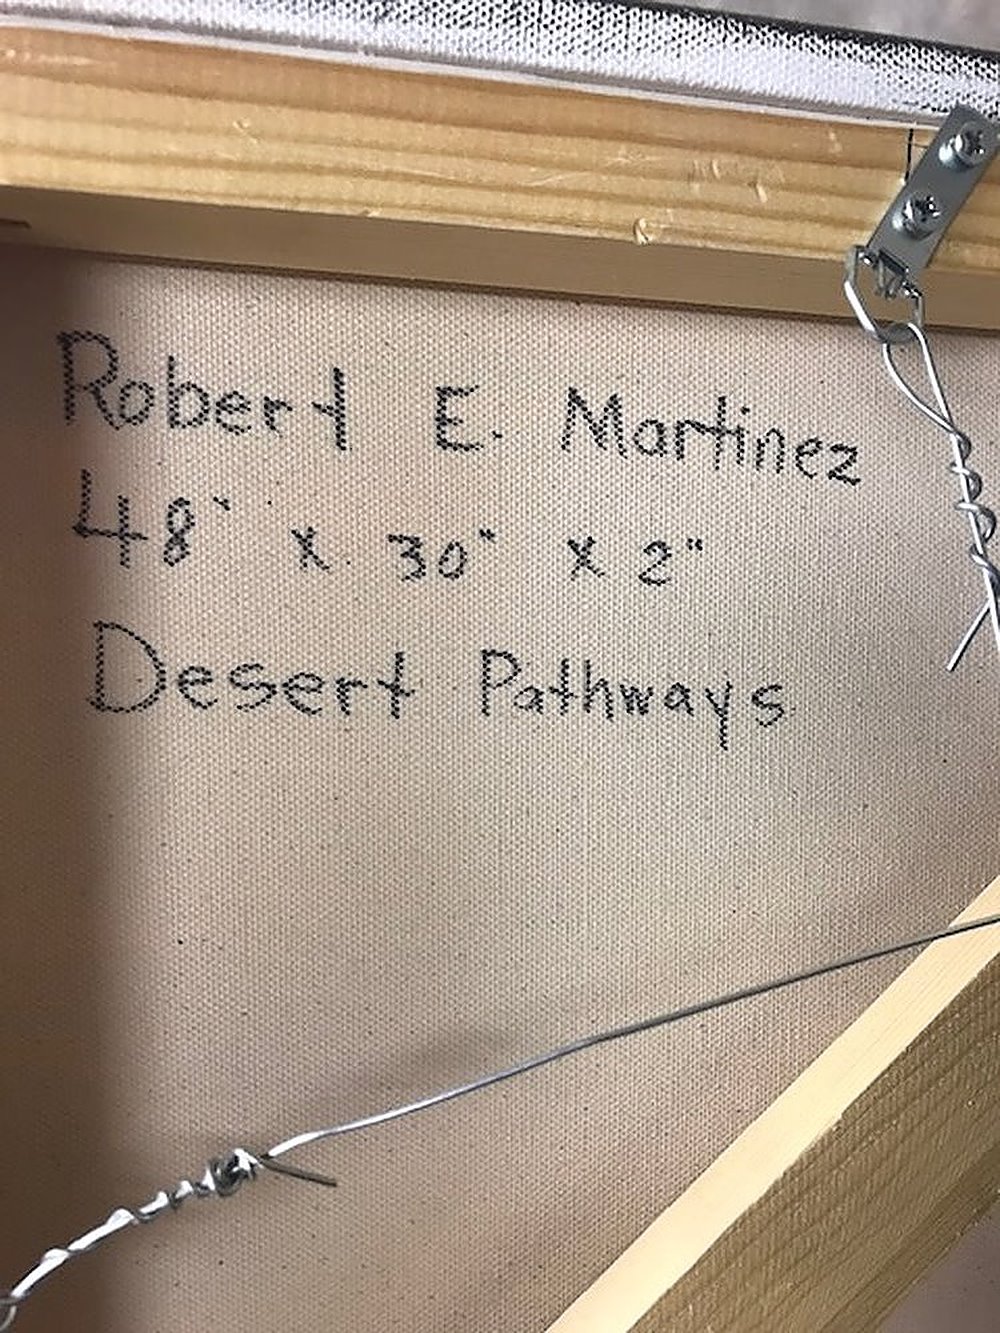 Desert Pathways by Robert Martinez | ArtworkNetwork.com